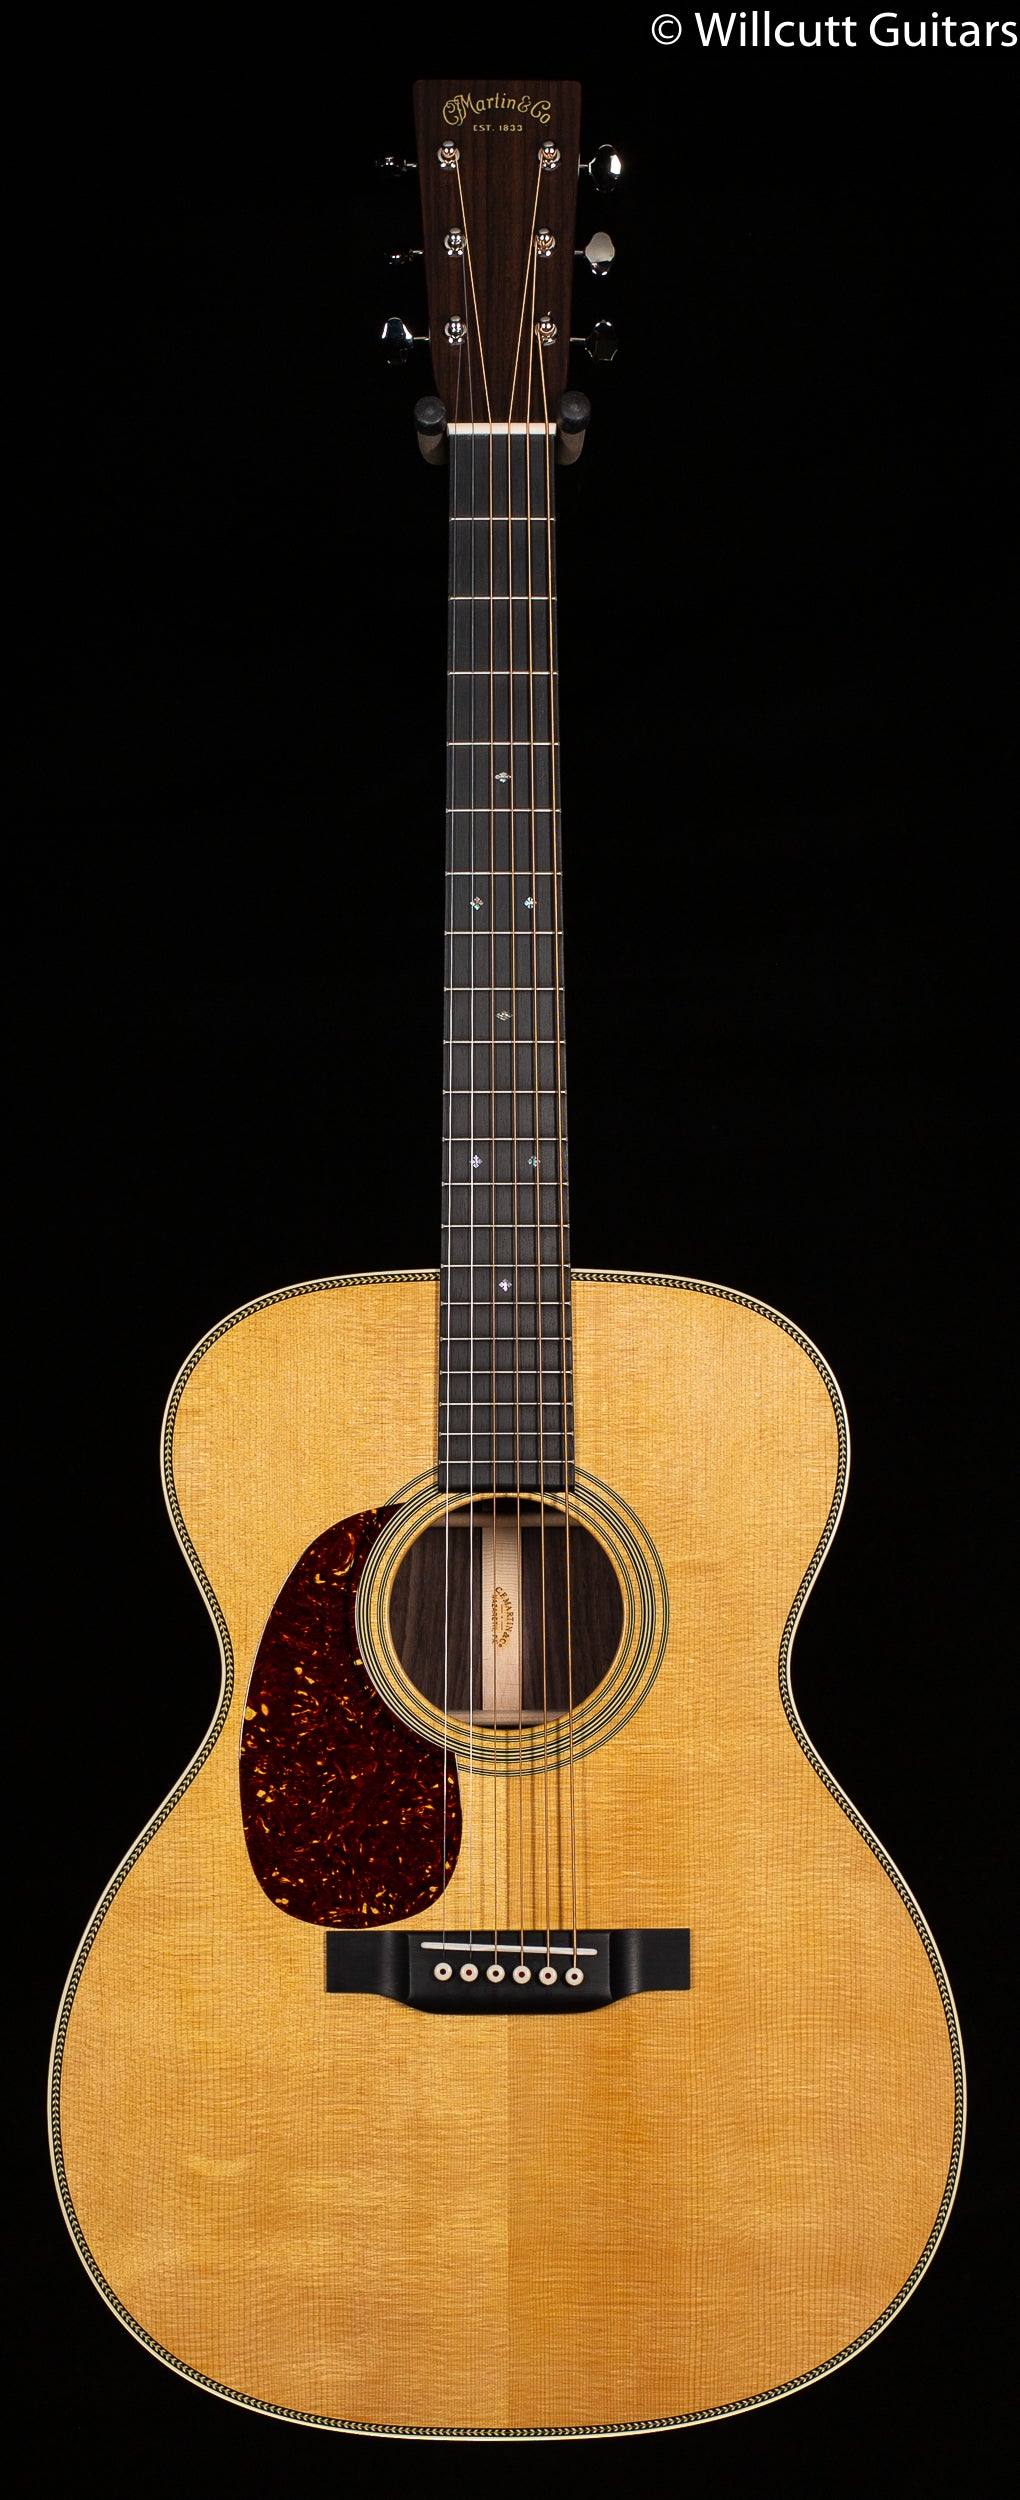 Martin 000-28 Lefty - Willcutt Guitars